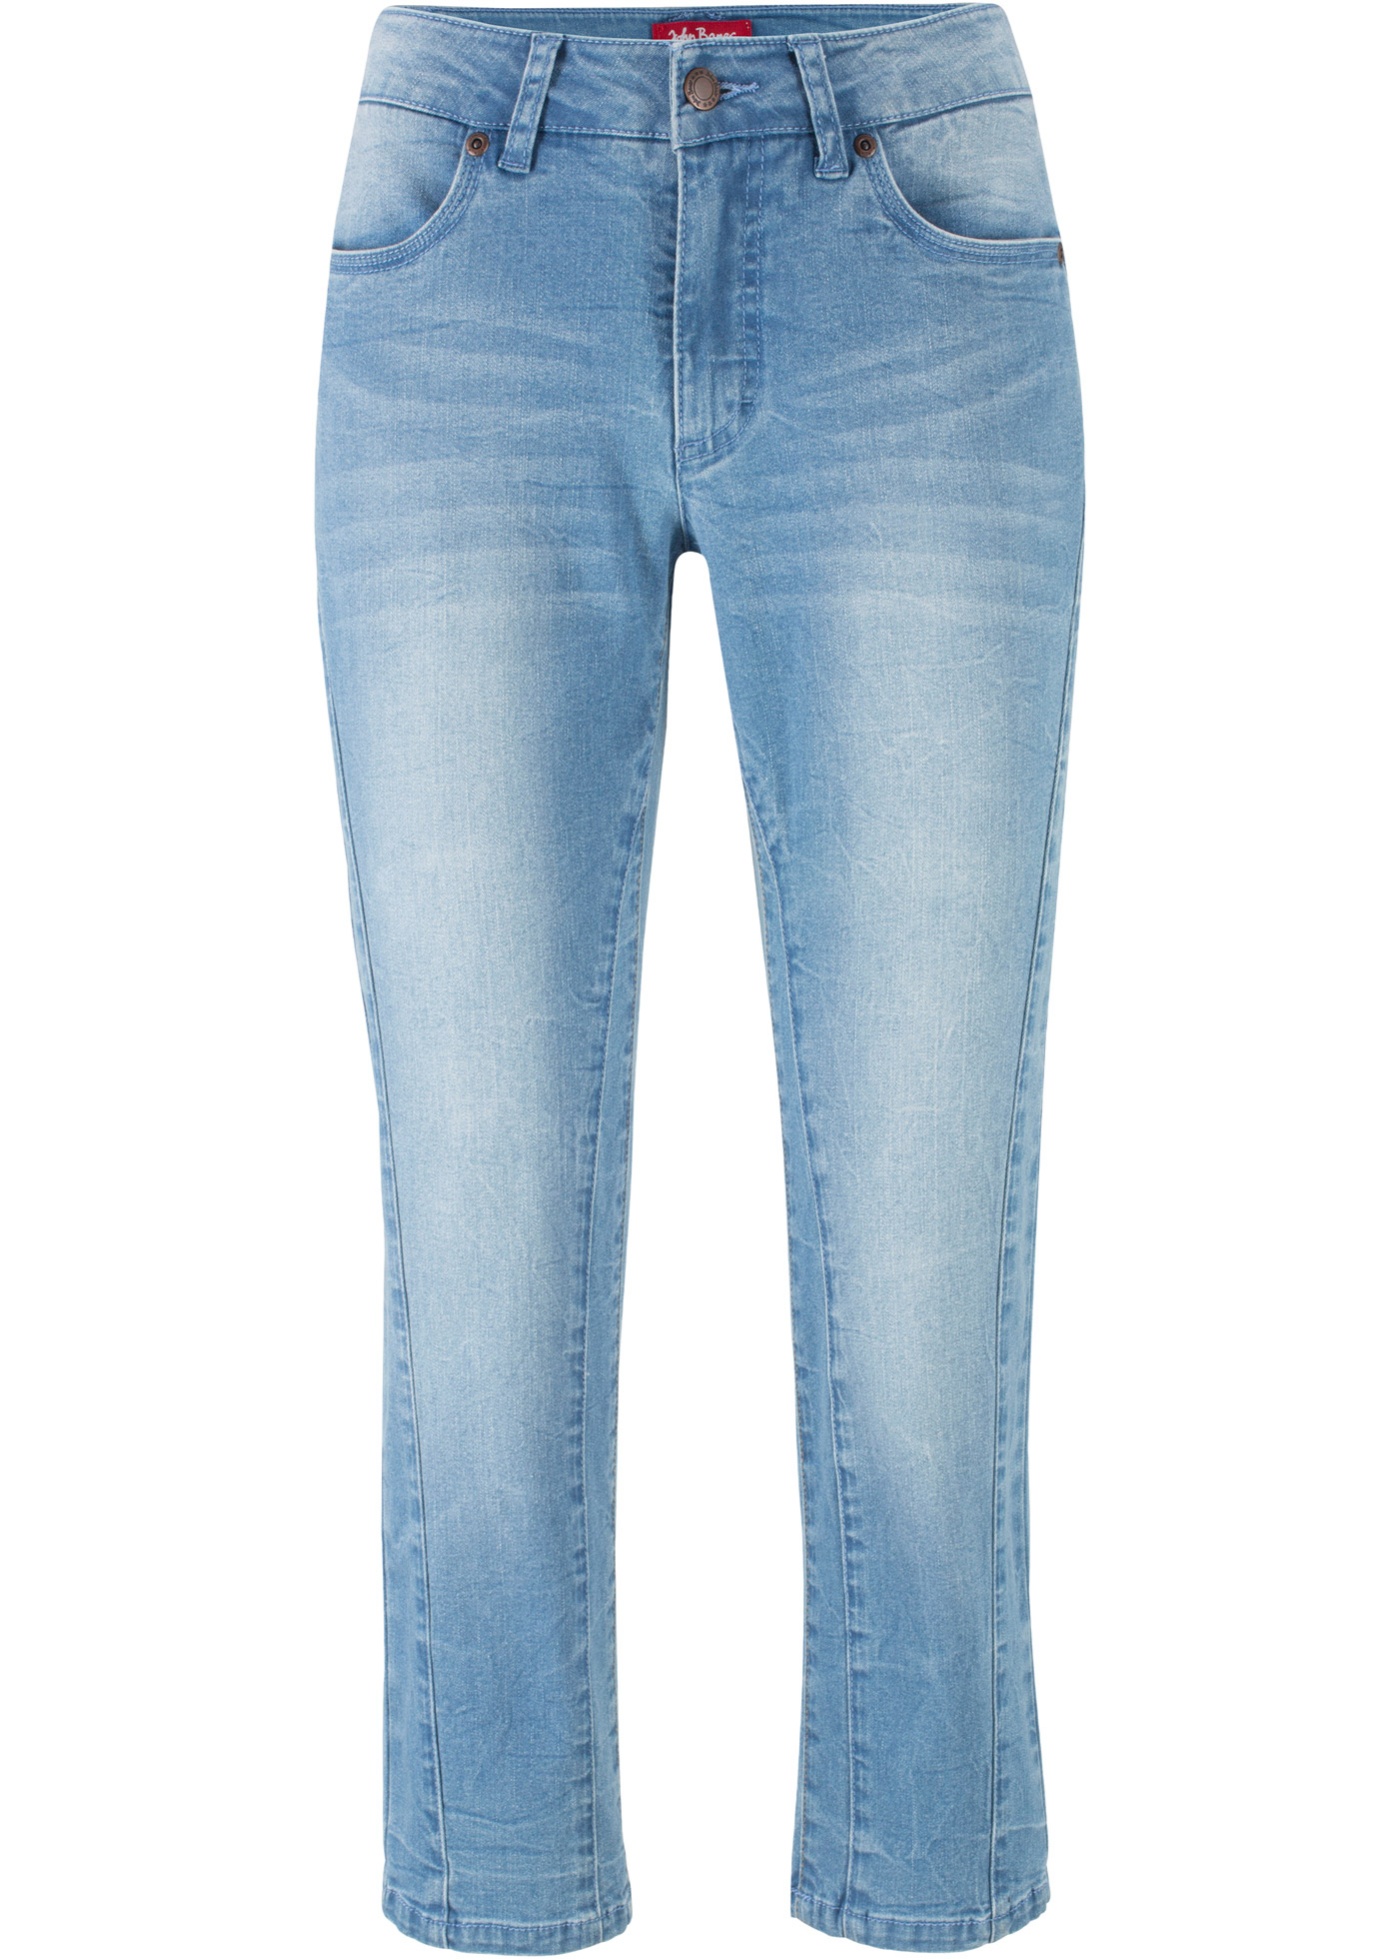 7/8 soft jeans